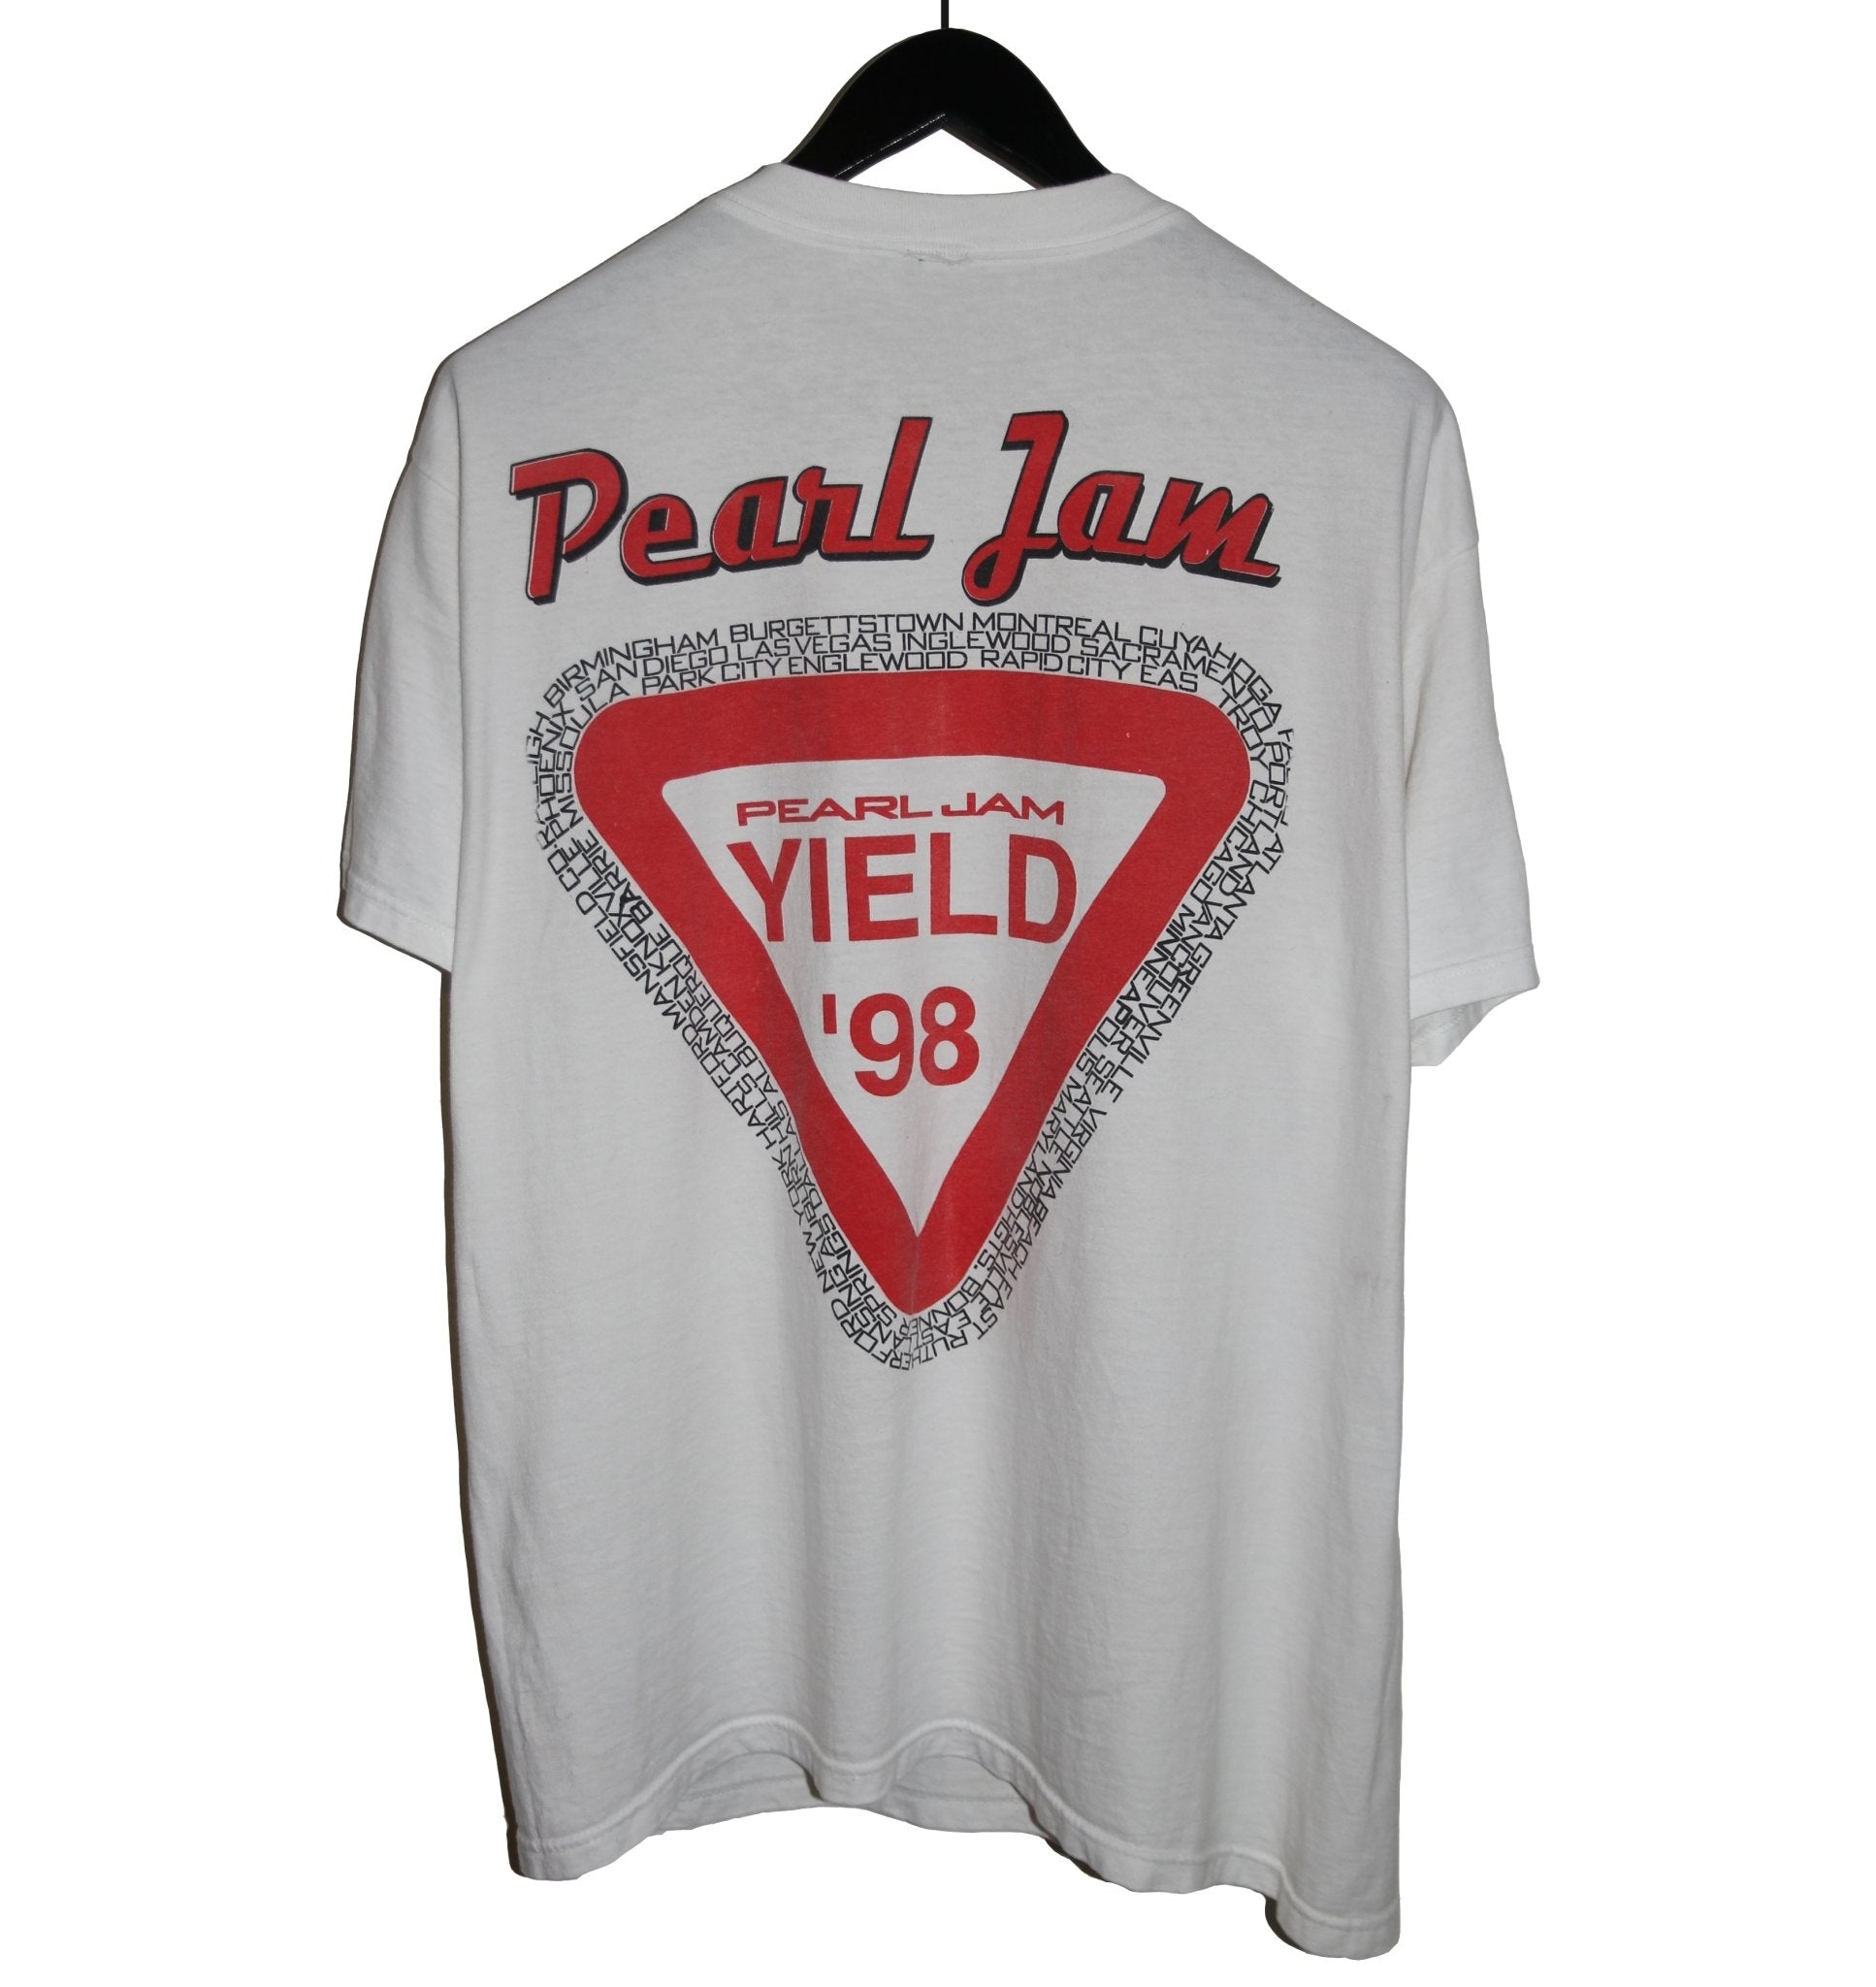 Pearl Jam 1998 Yield Tour Shirt - Faded AU